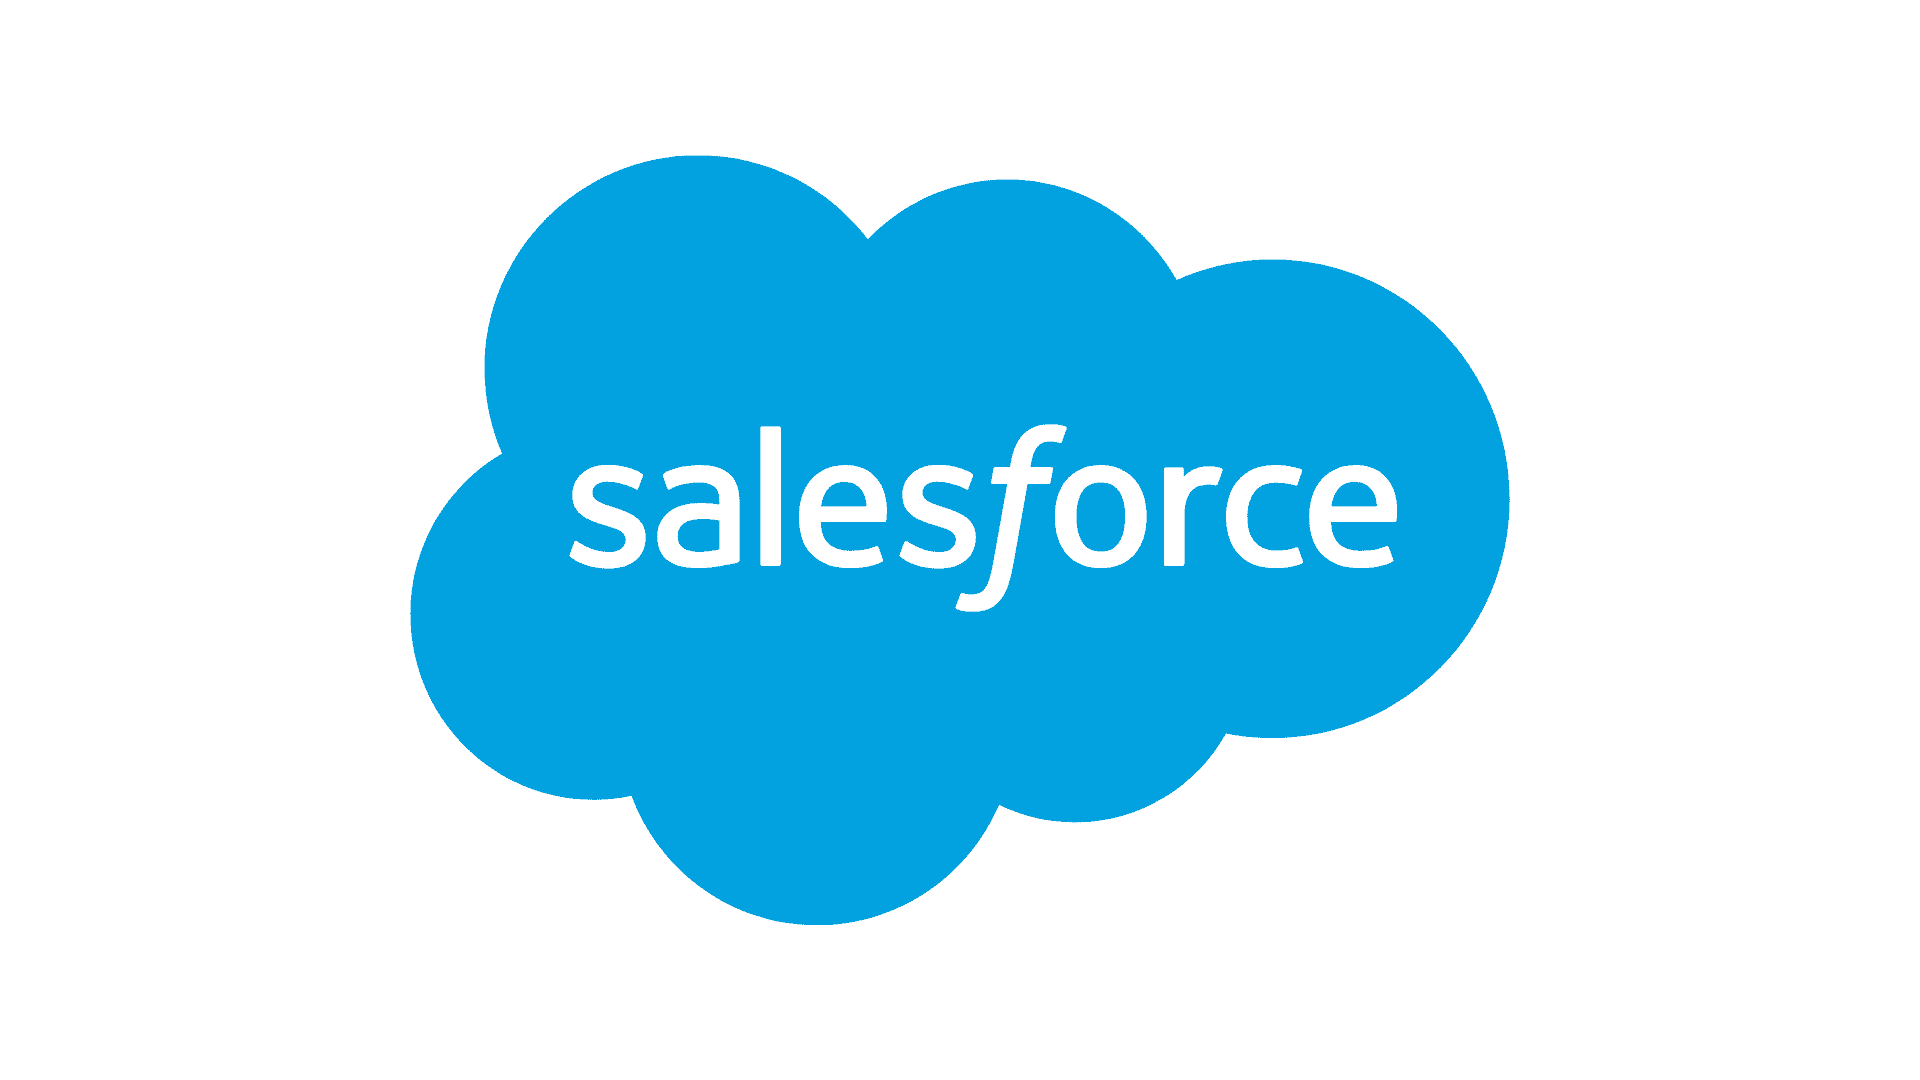 salesforce sales cloud